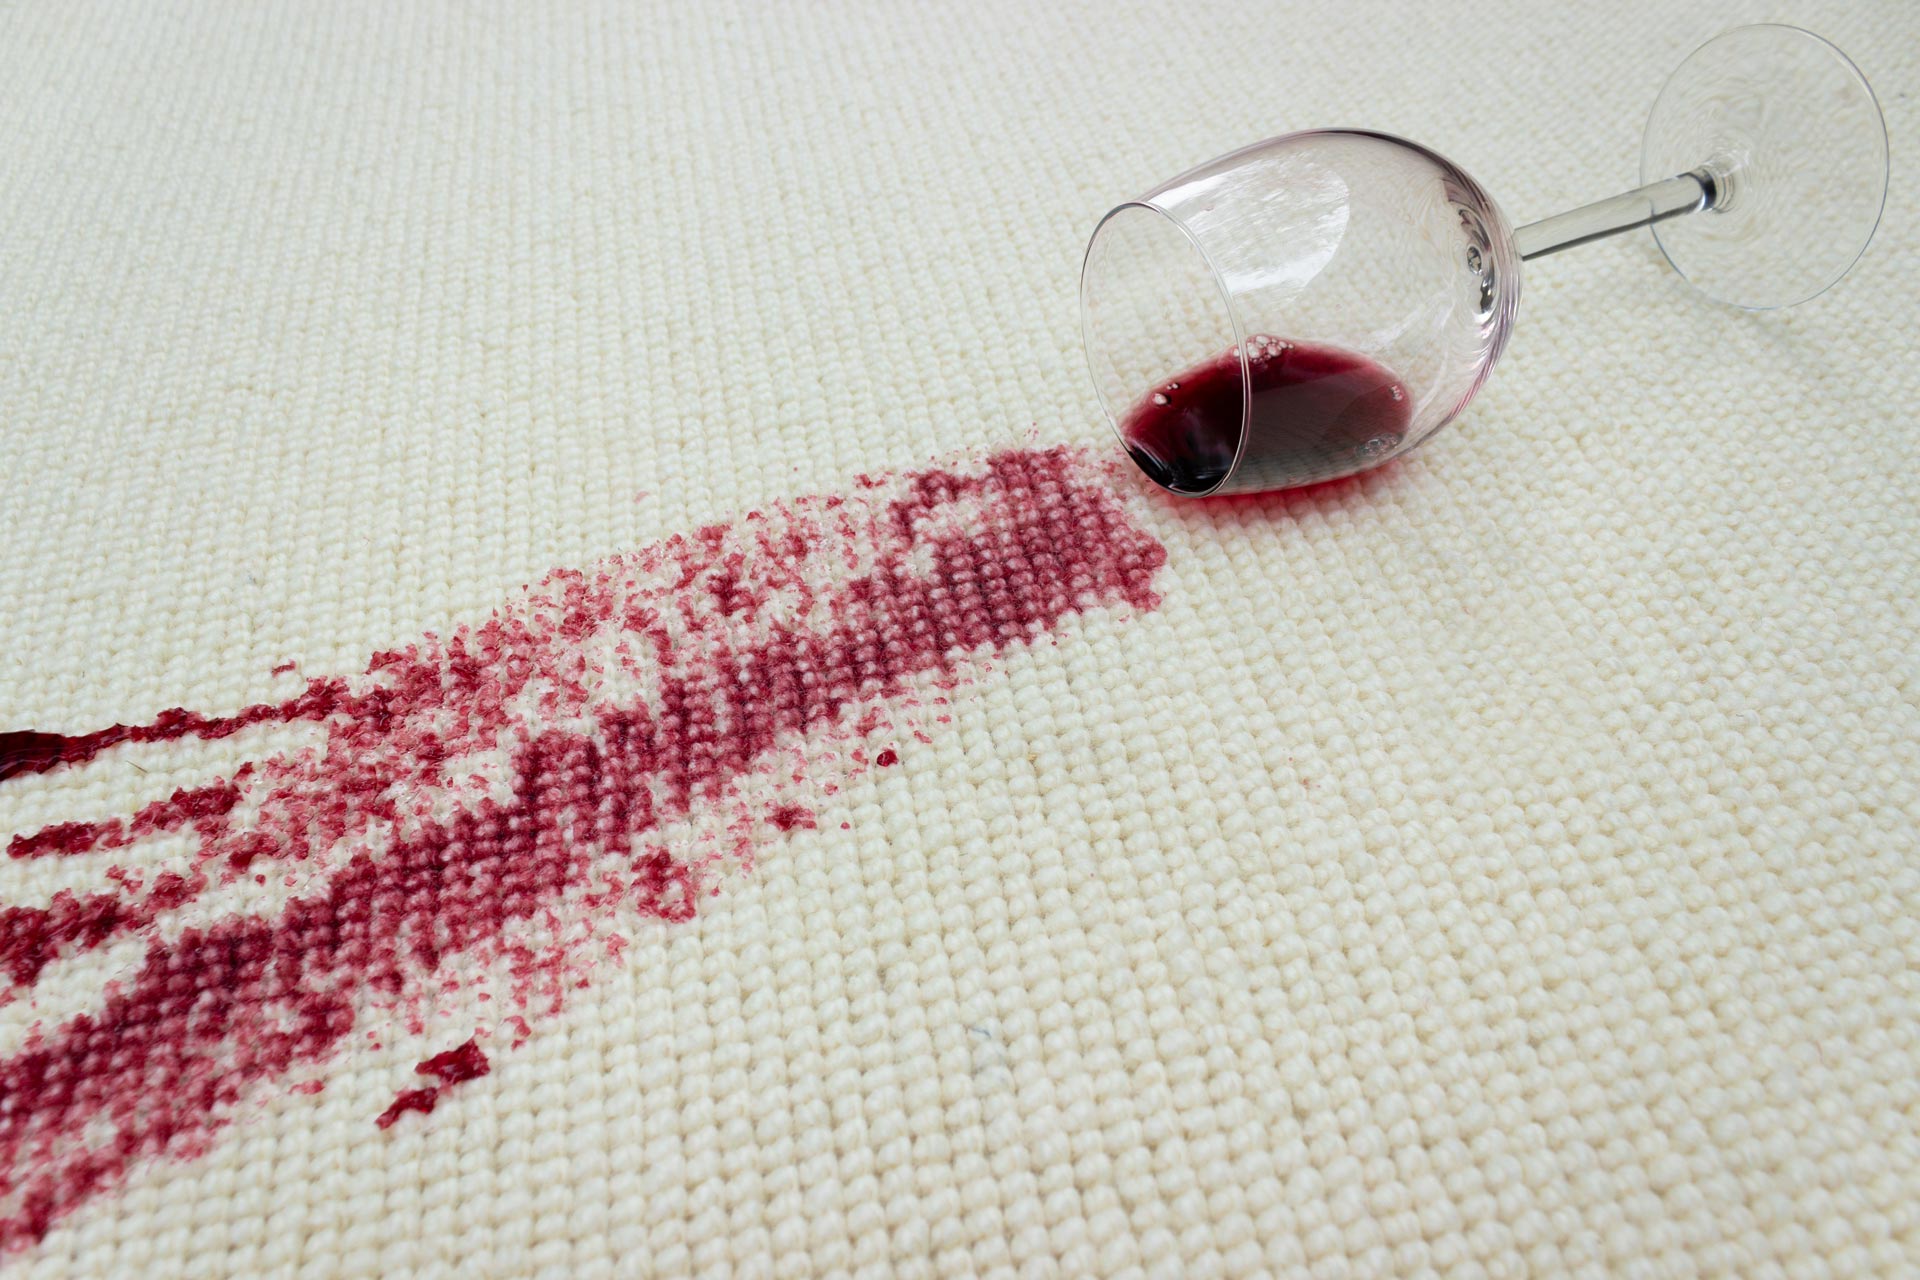 red wine spill on cream wool carpet